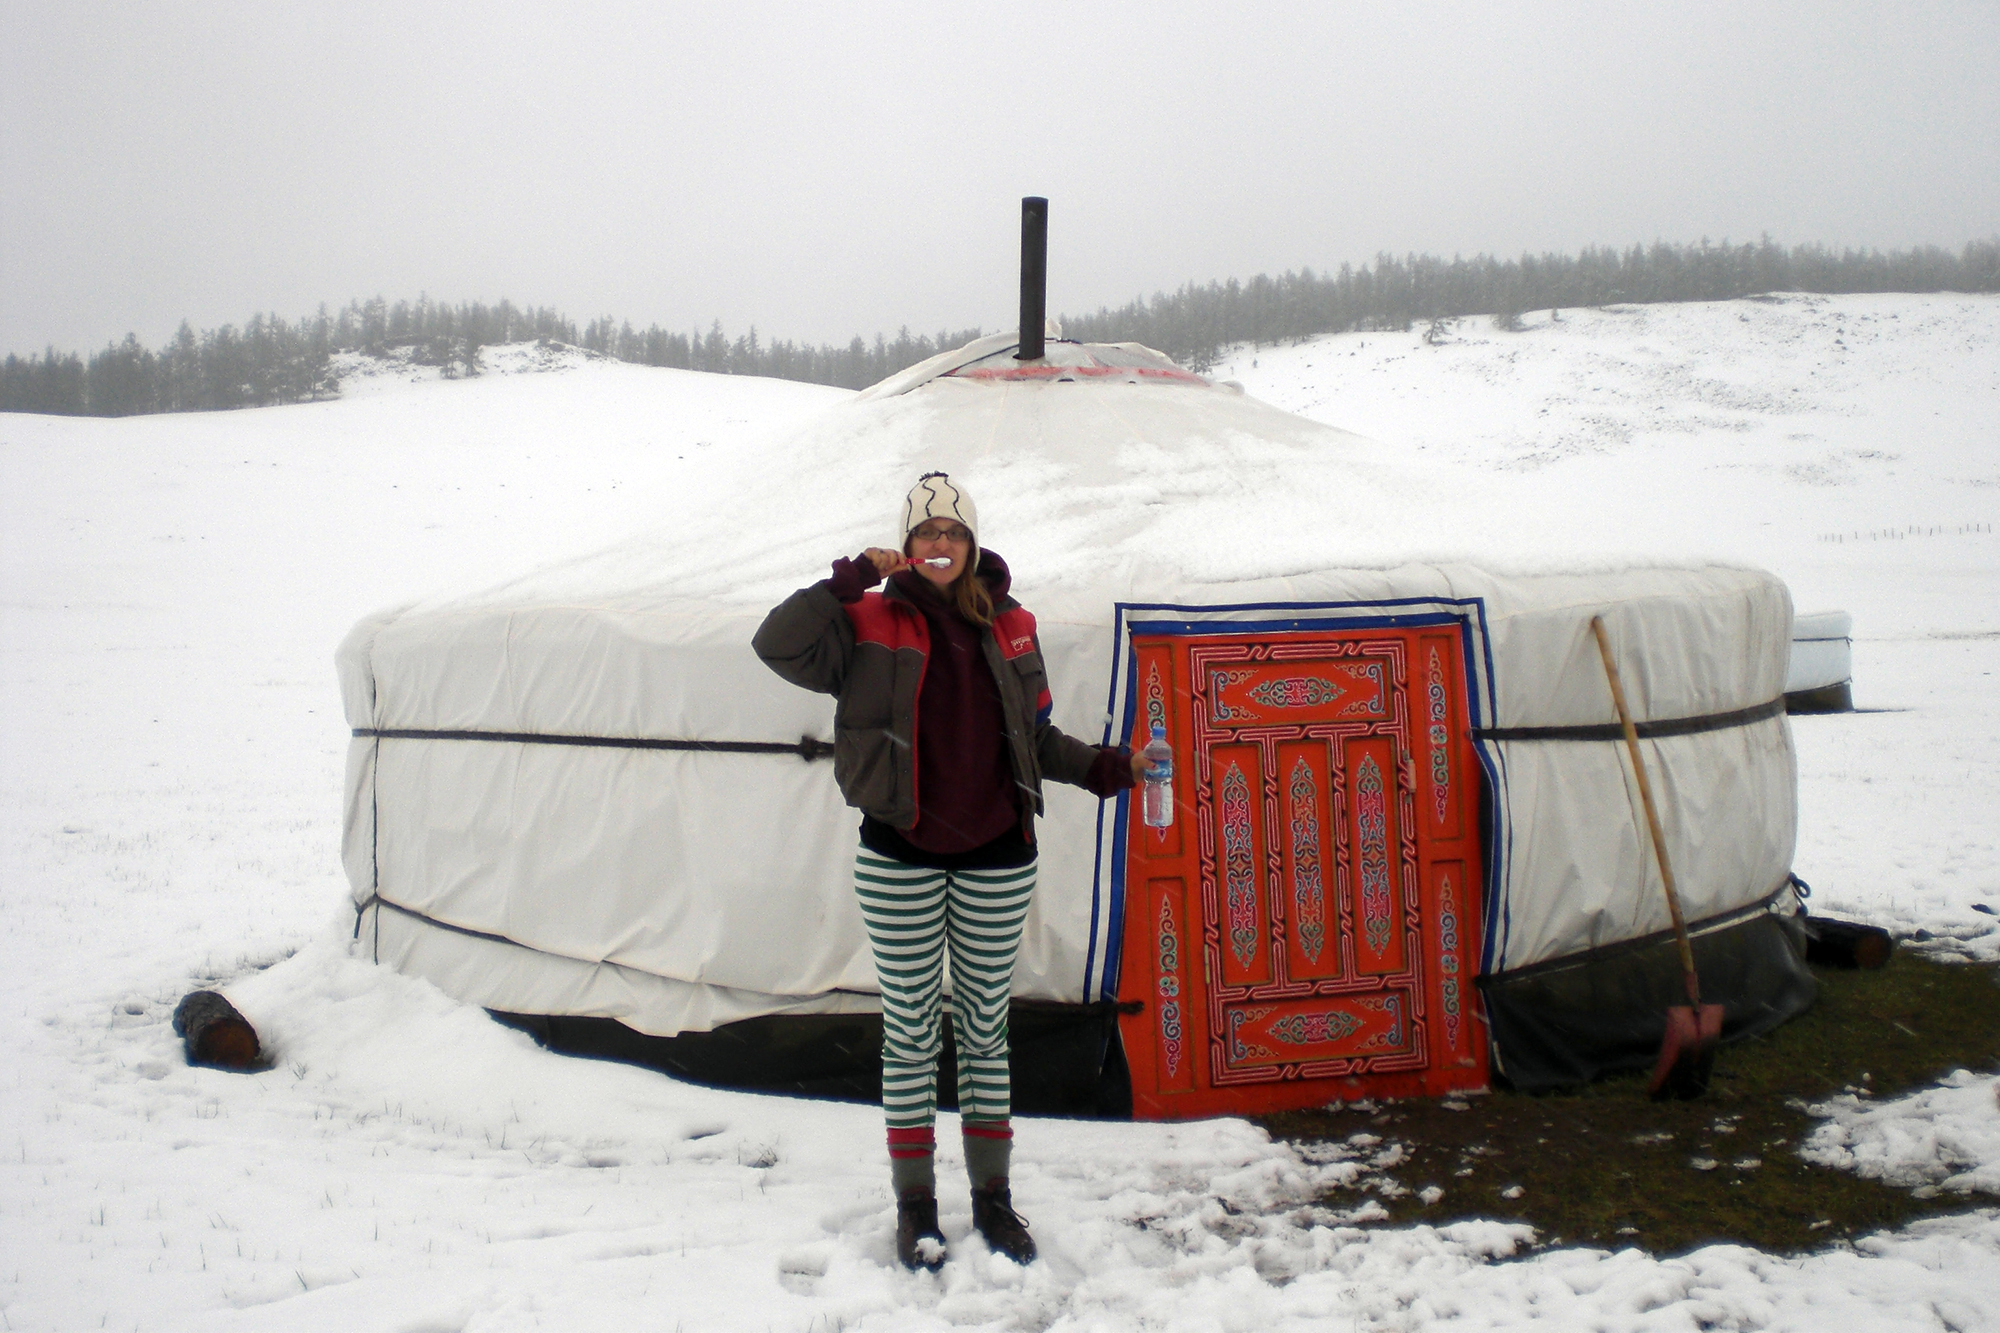 dzuds snowstorm with yurt